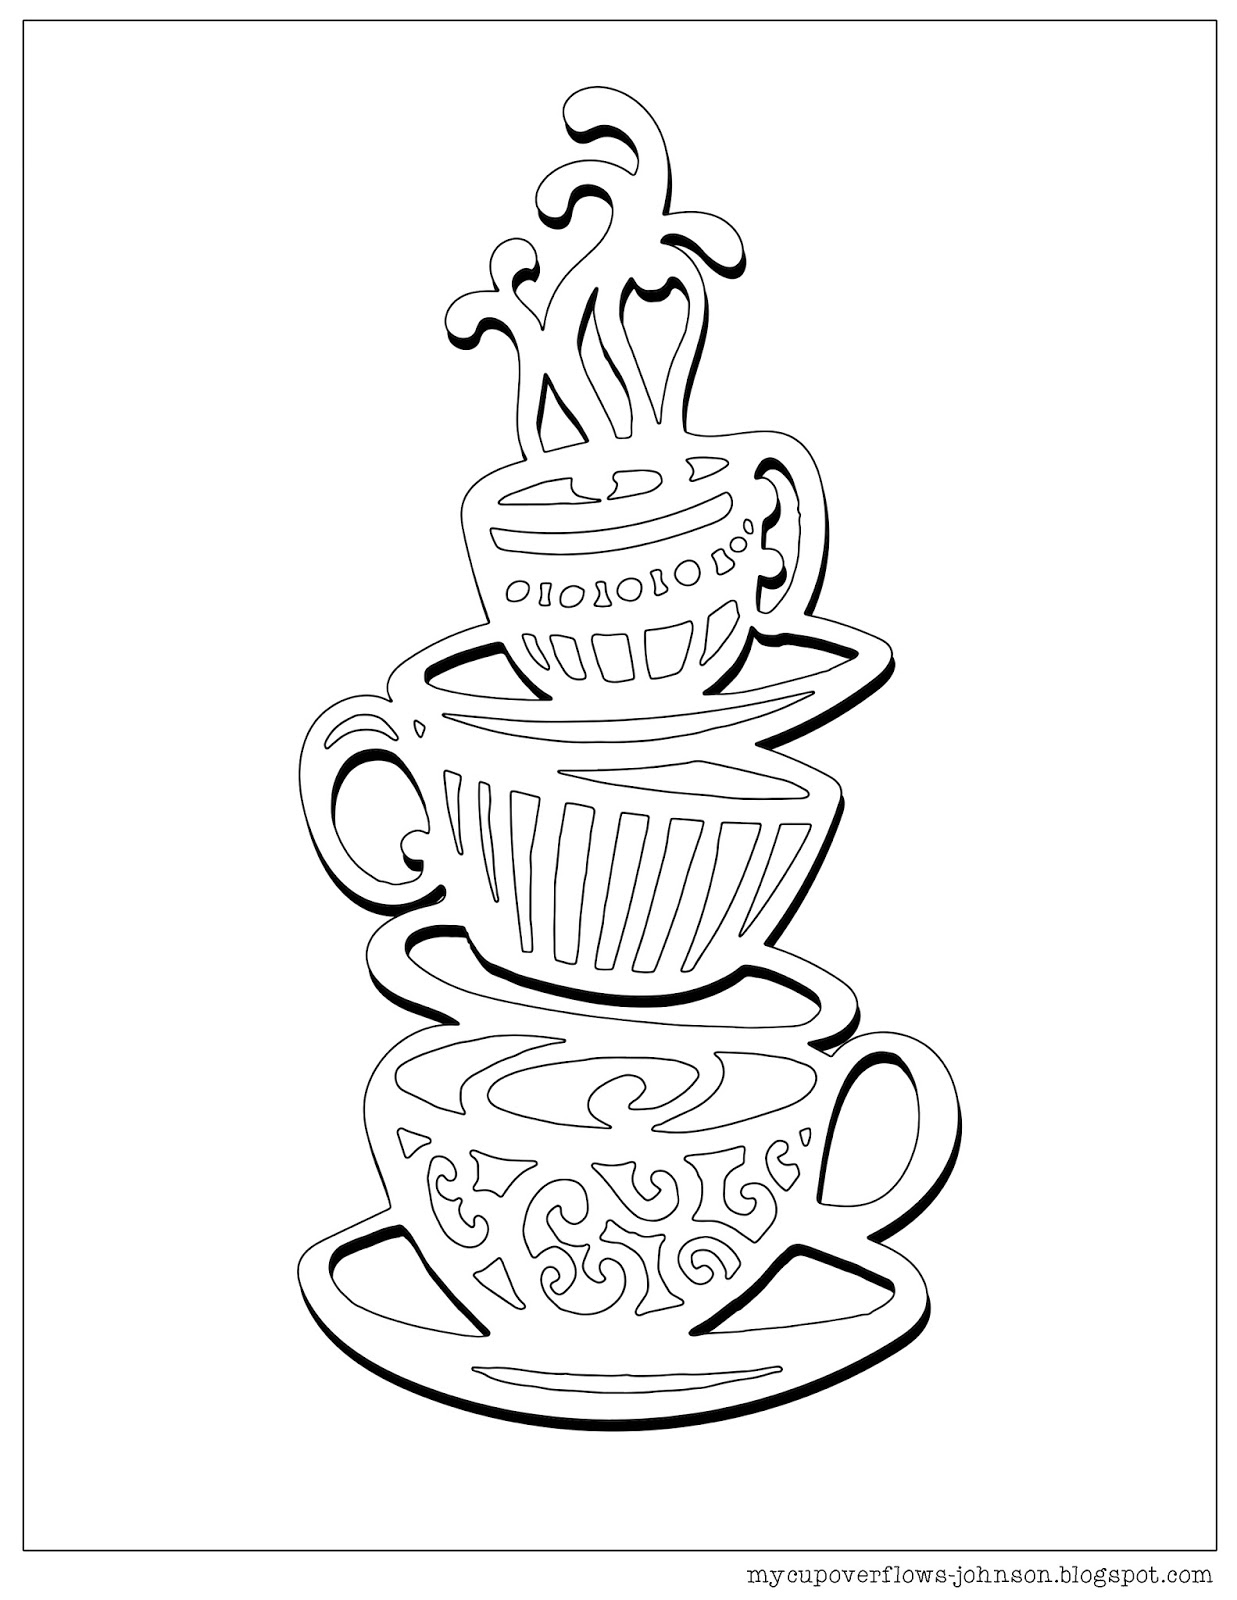 My Cup Overflows: Tea and Coffee